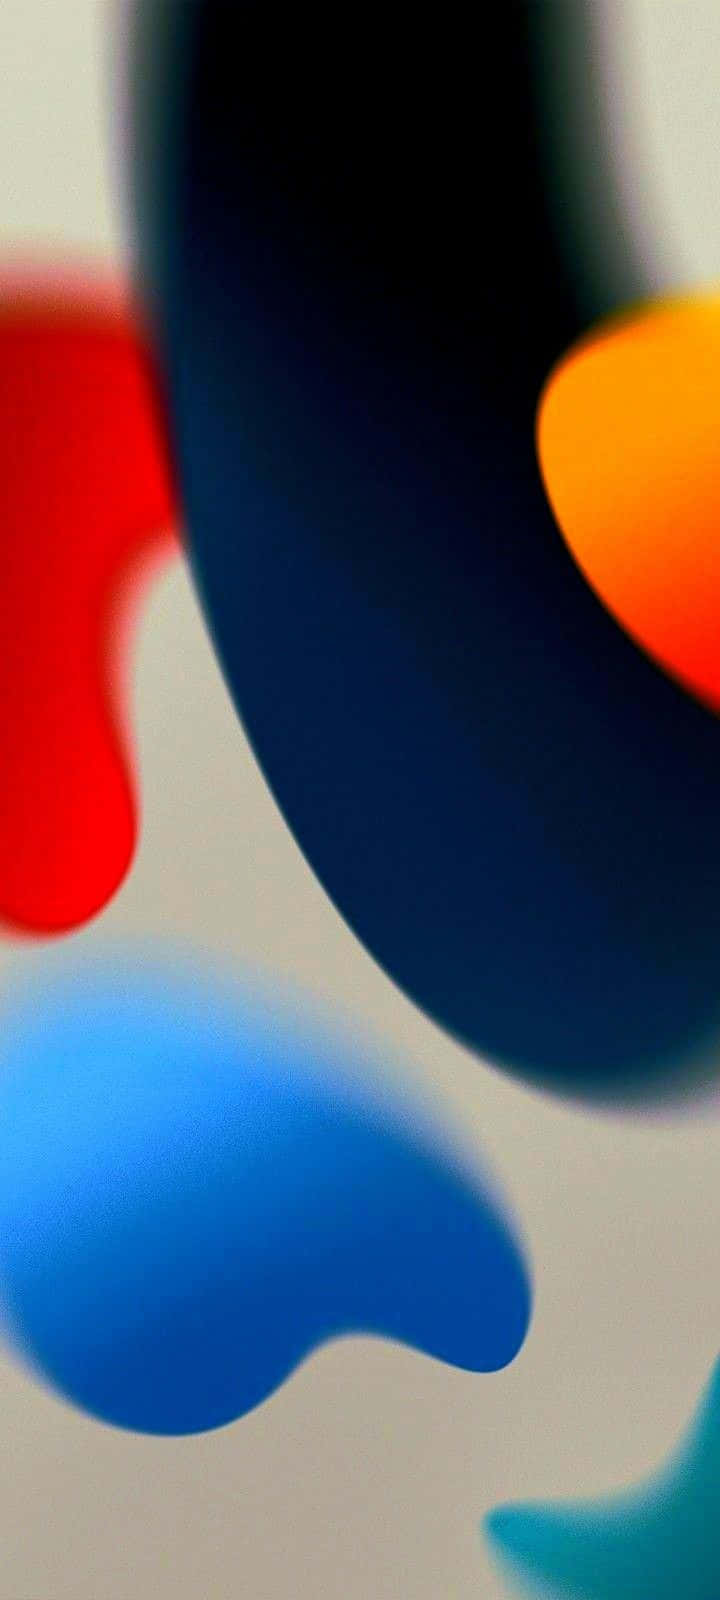 Apple Iphone X Paint Splatters Background